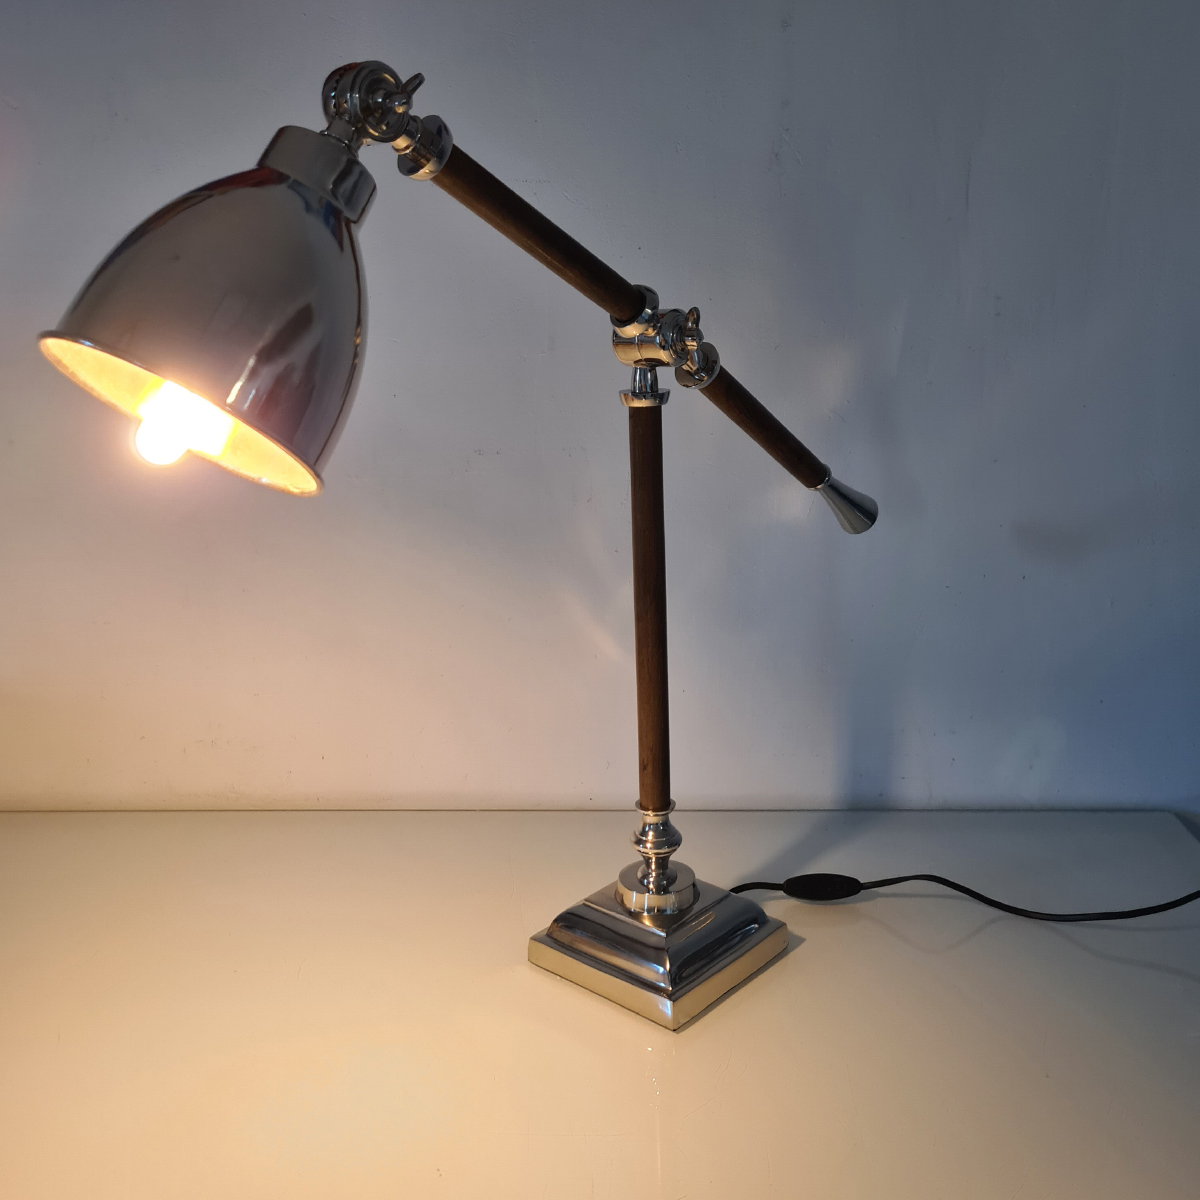 Adjustable desk lamp in wood and metal